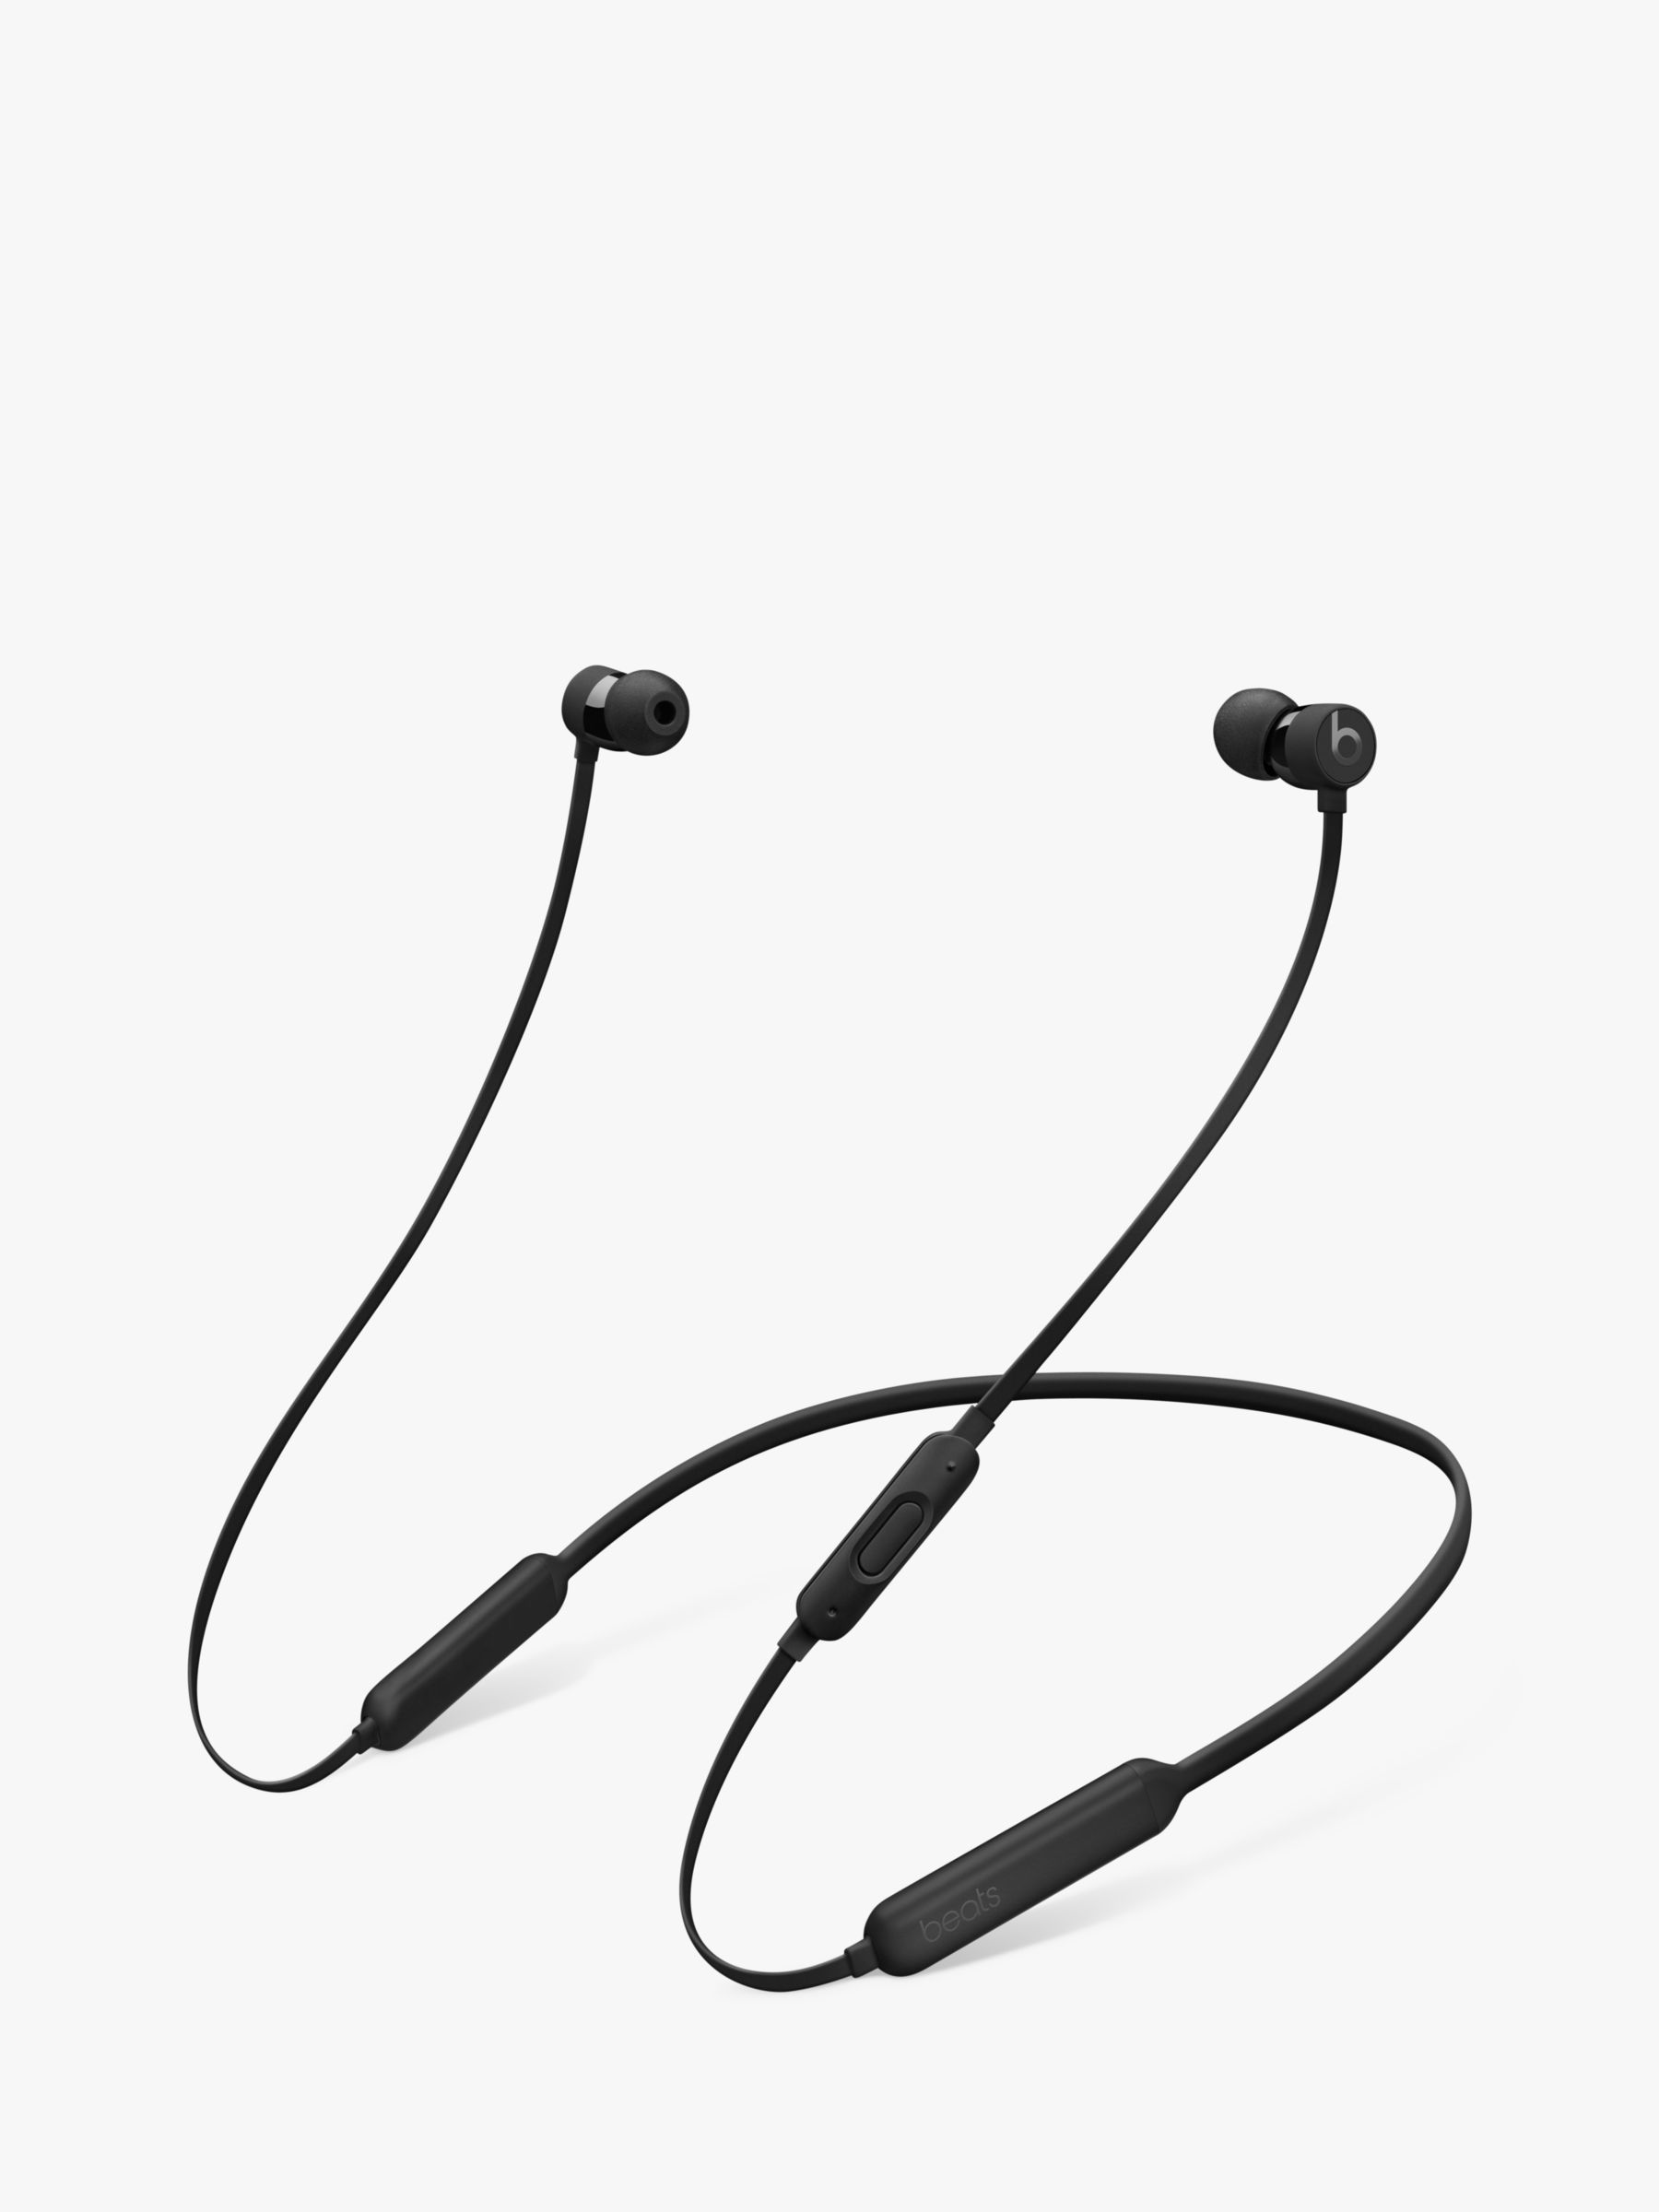 Beatsˣ Wireless Bluetooth In-Ear Headphones with Mic/Remote